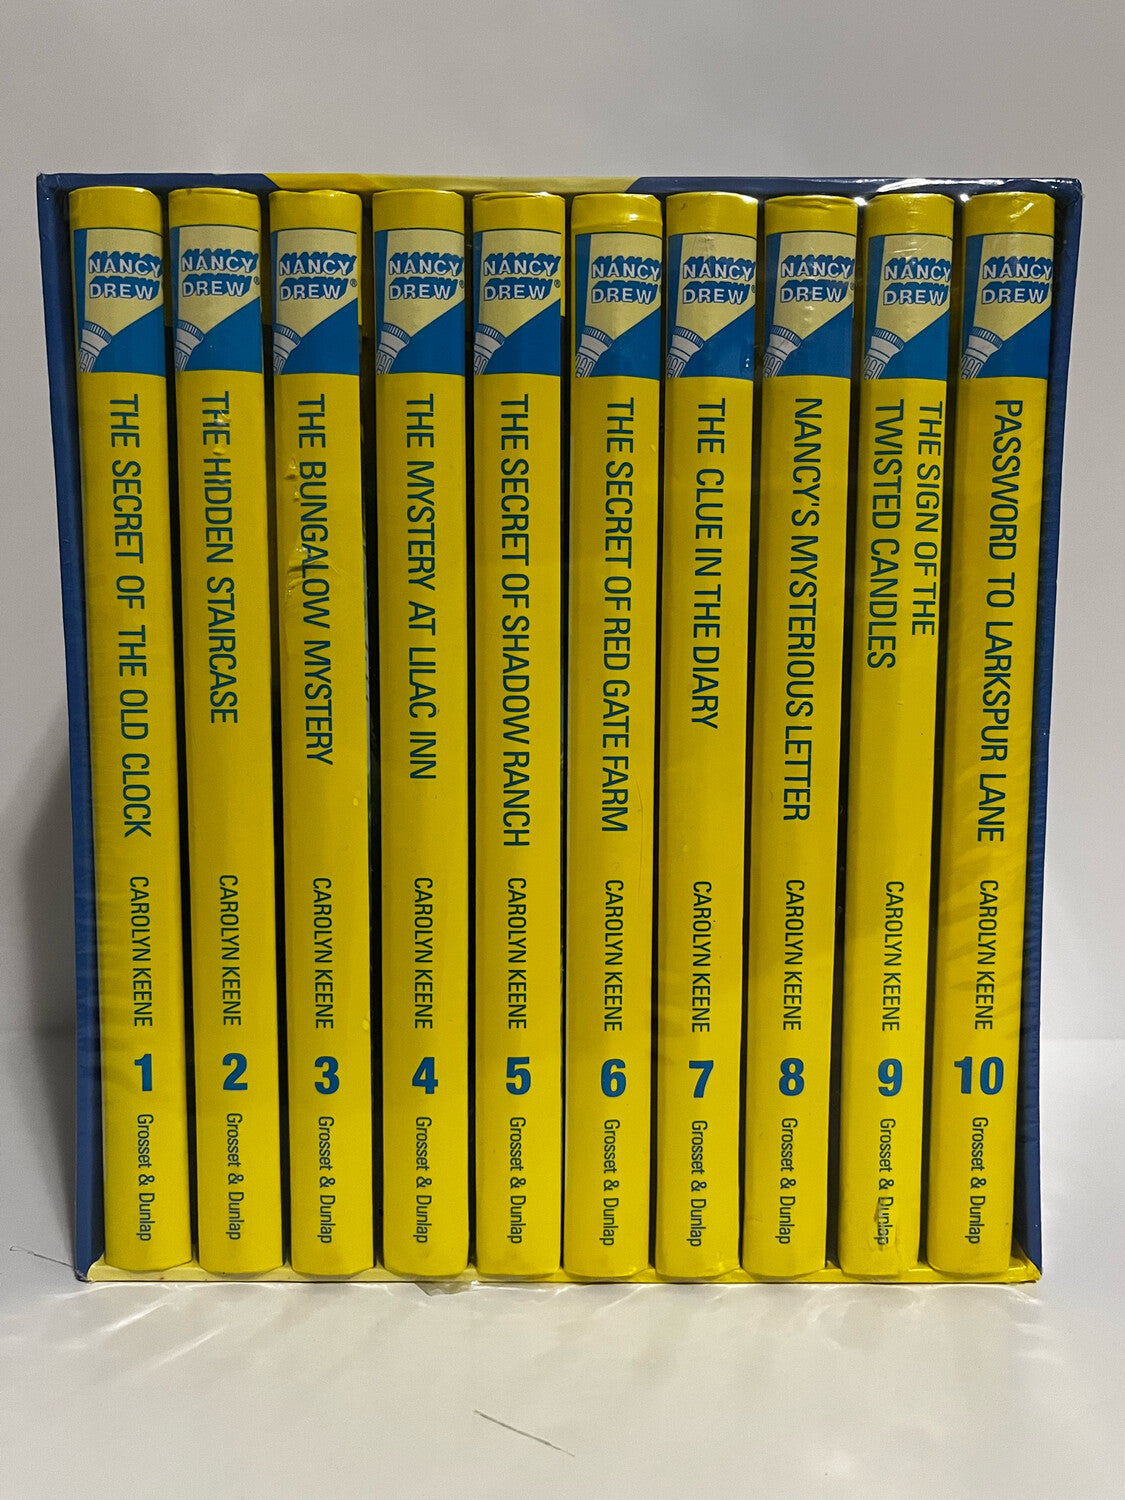 Nancy Drew Set - Books 1-10